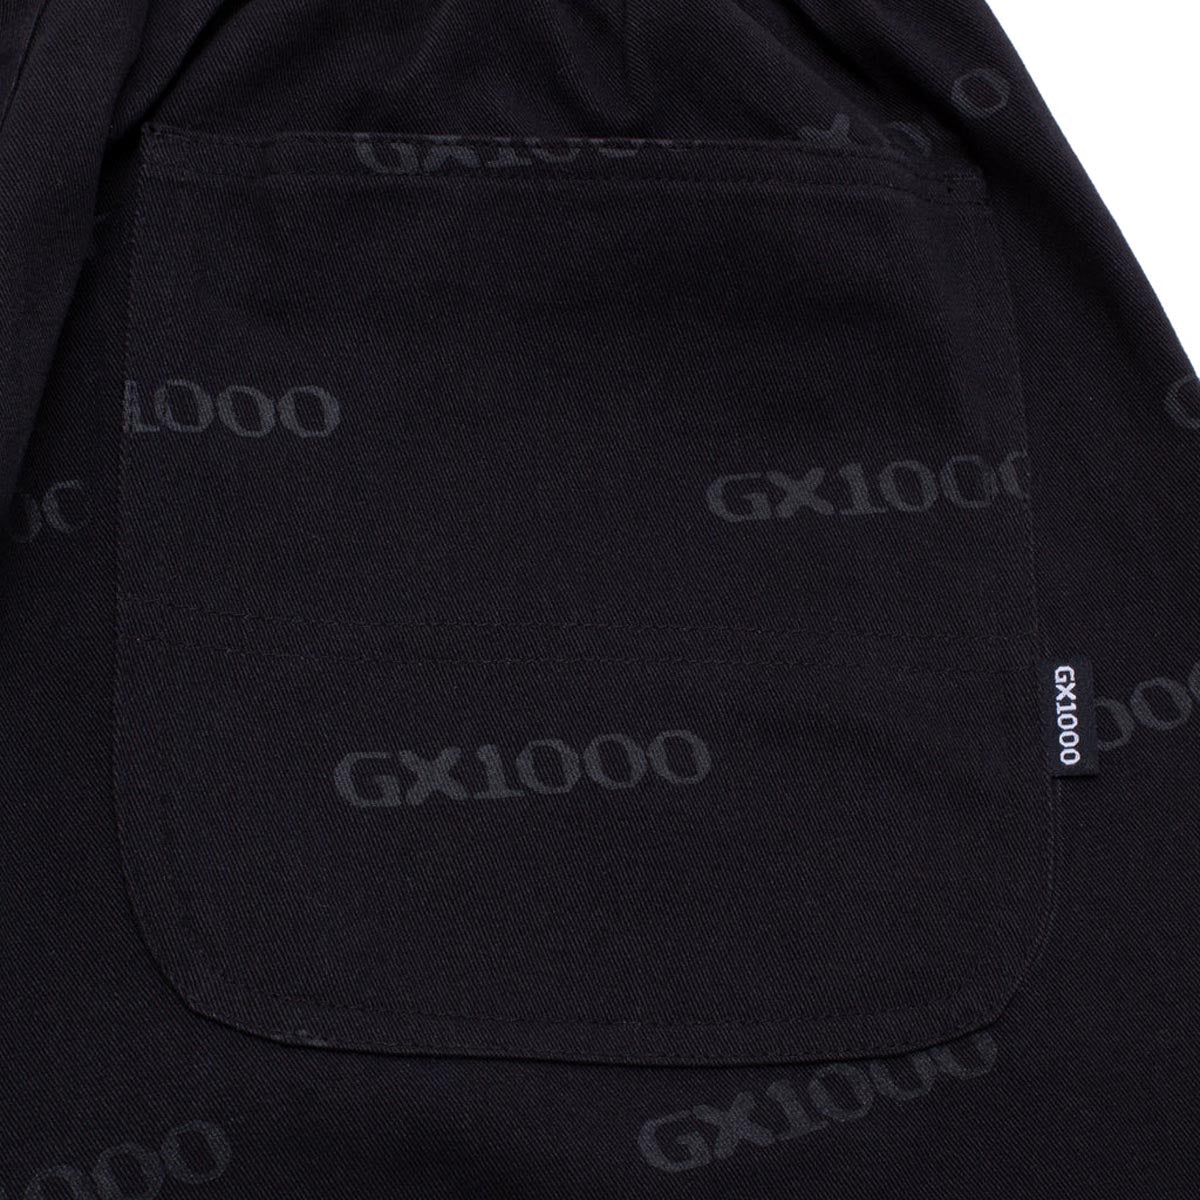 GX1000 Dojo Pants - Black image 4